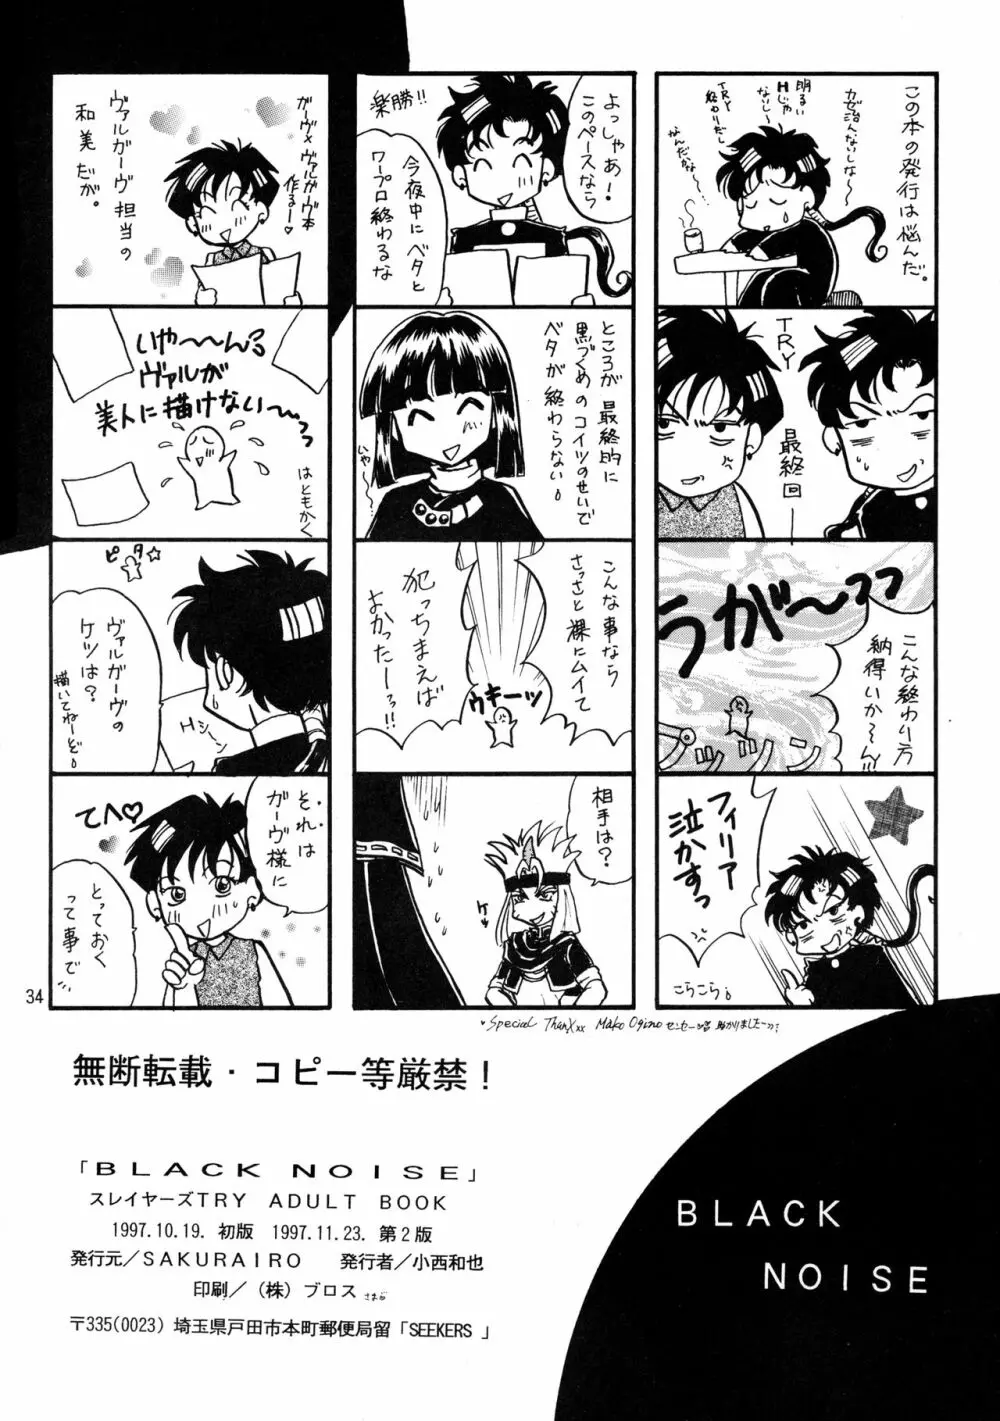 [SAKURAIRO (小西和也) BLACK NOISE (スレイヤーズ) [1997年11月23日] 33ページ